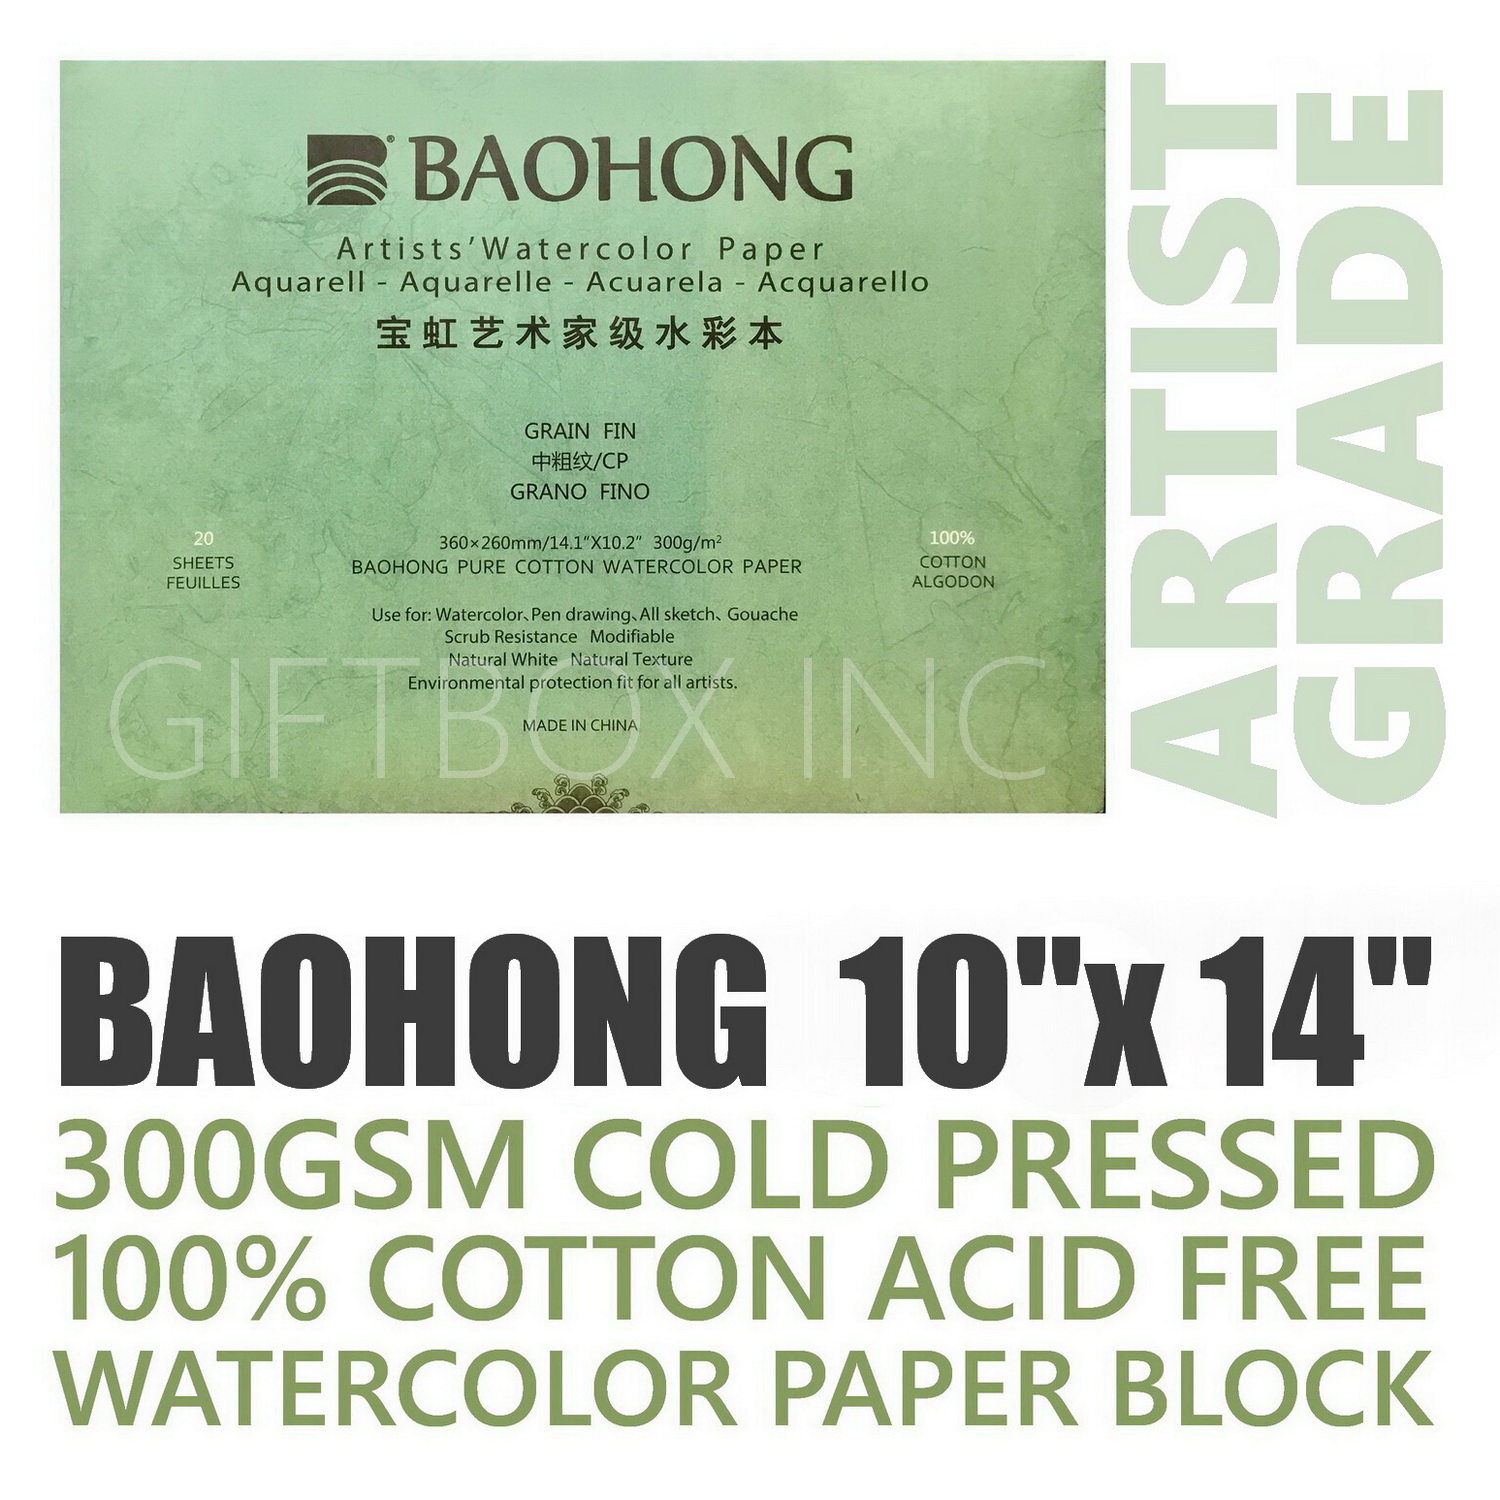  Watercolor Paper Block, BAOHONG Artists' Watercolor Block, 100%  Cotton, Acid-Free, 140LB/300GSM, 20 Sheets per Block (Rough Grain  14.1x10.2)